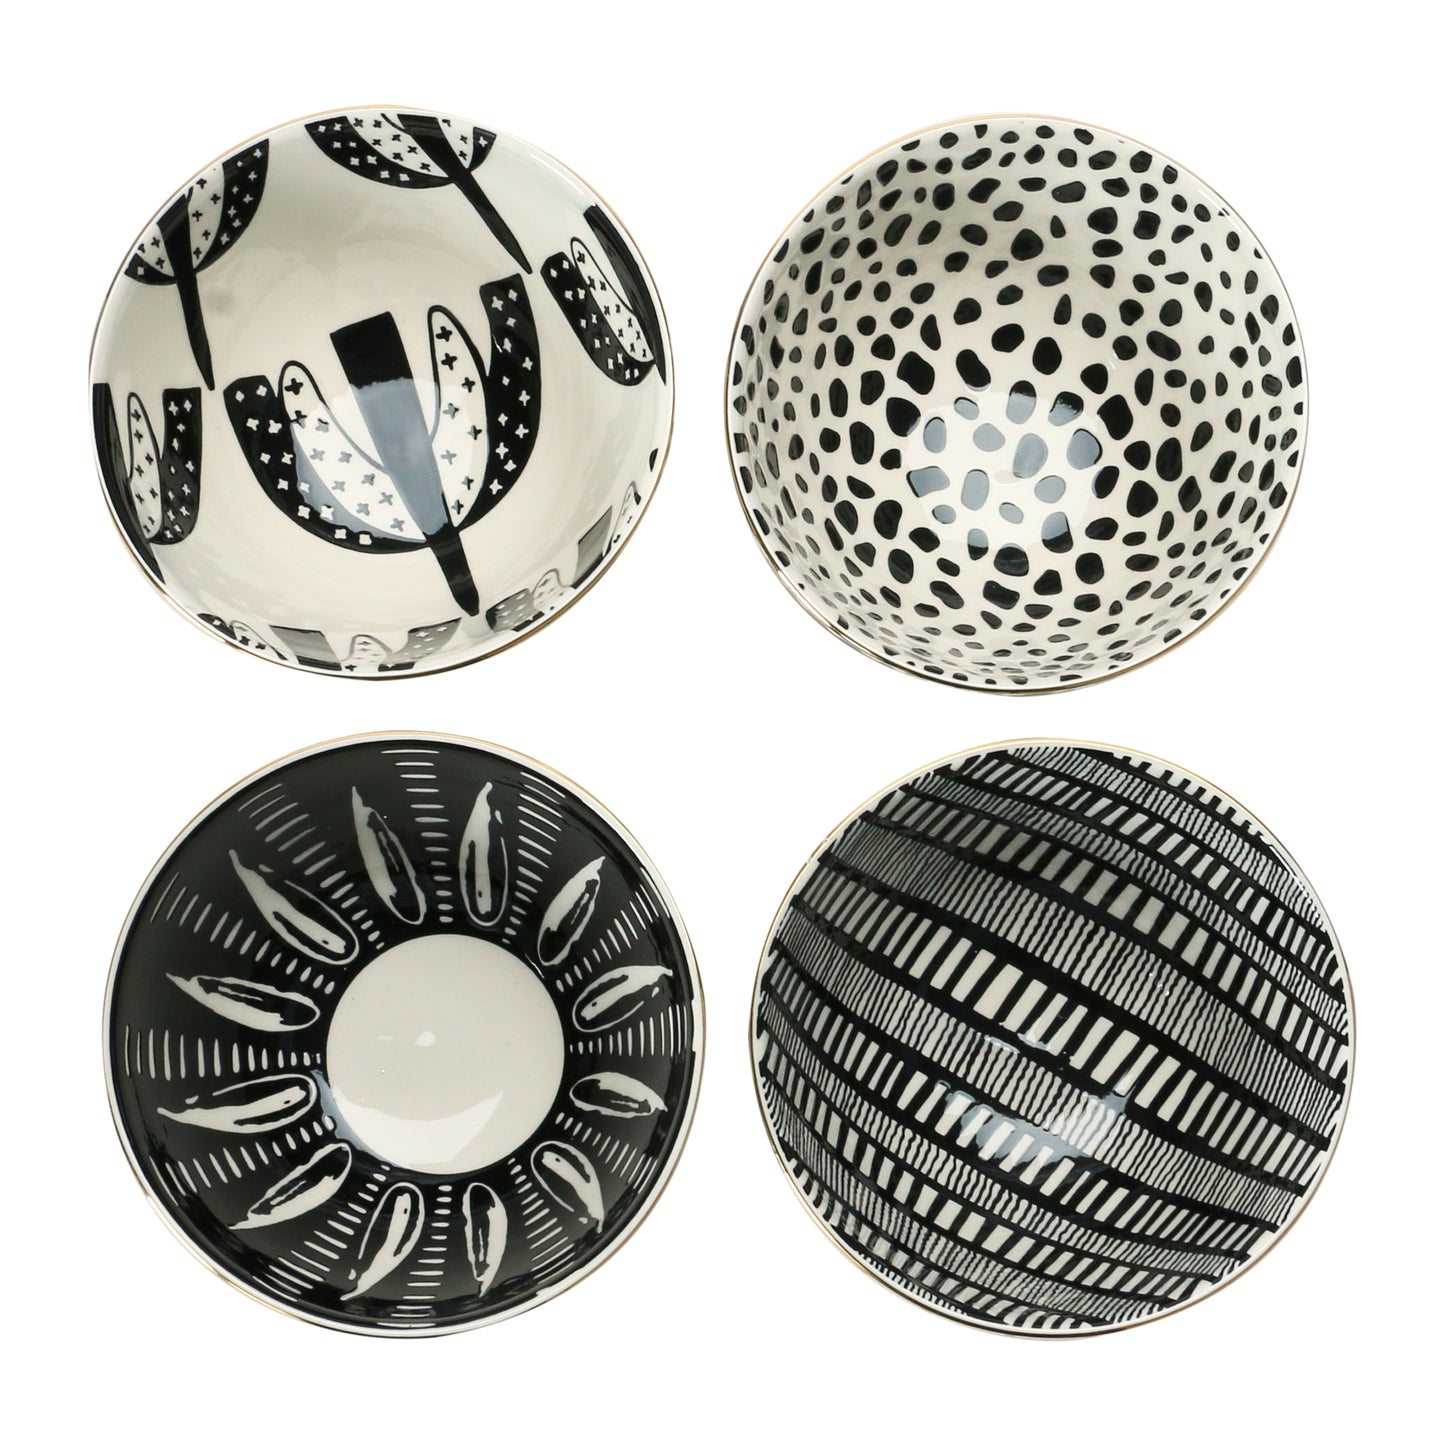 5" Stoneware Bowl with Pattern